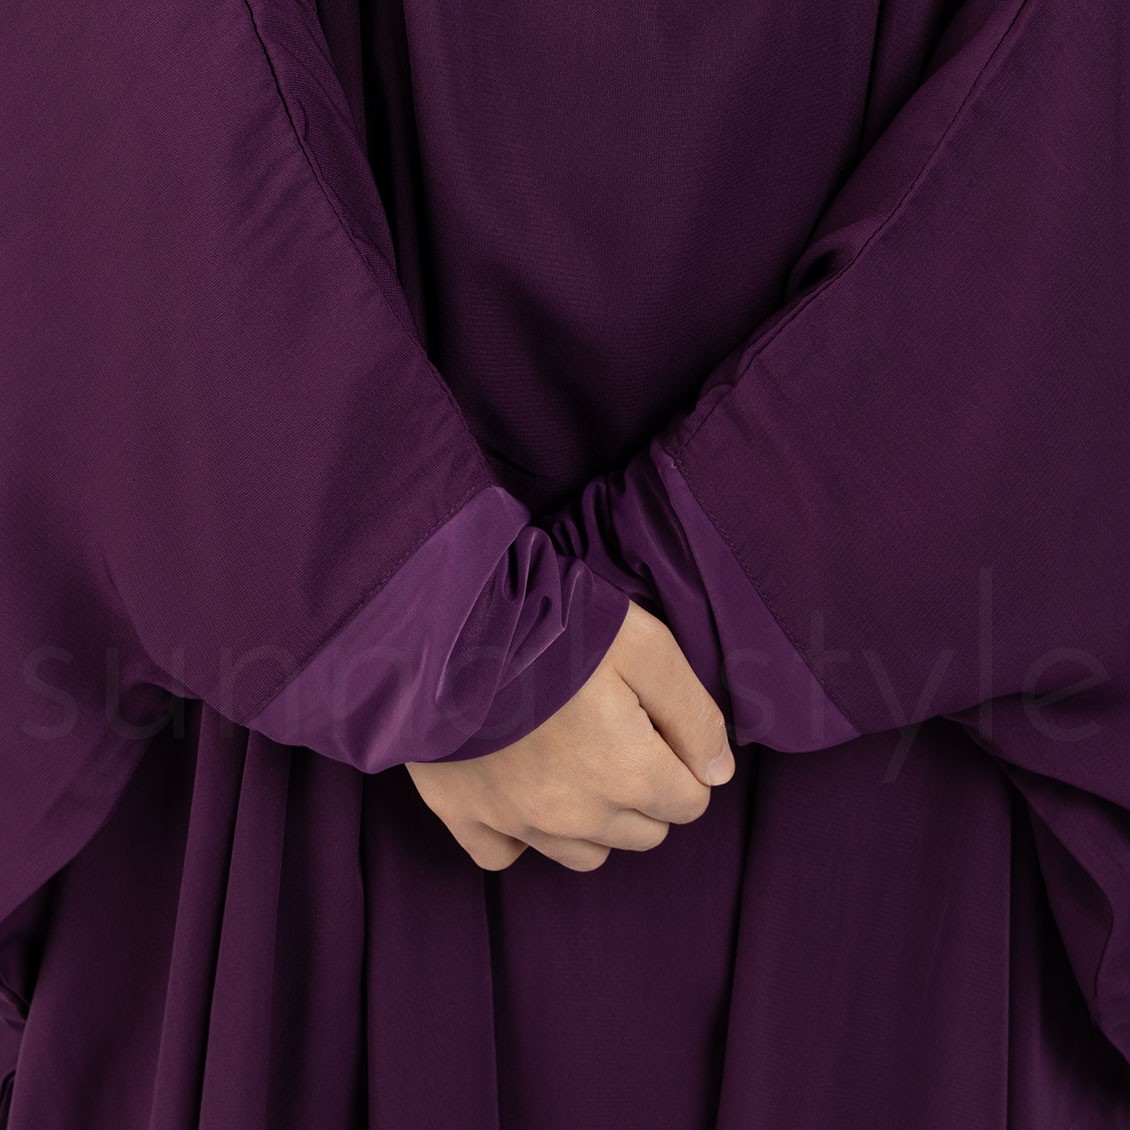 Sunnah Style Girls Plain Full Length Jilbab Grape